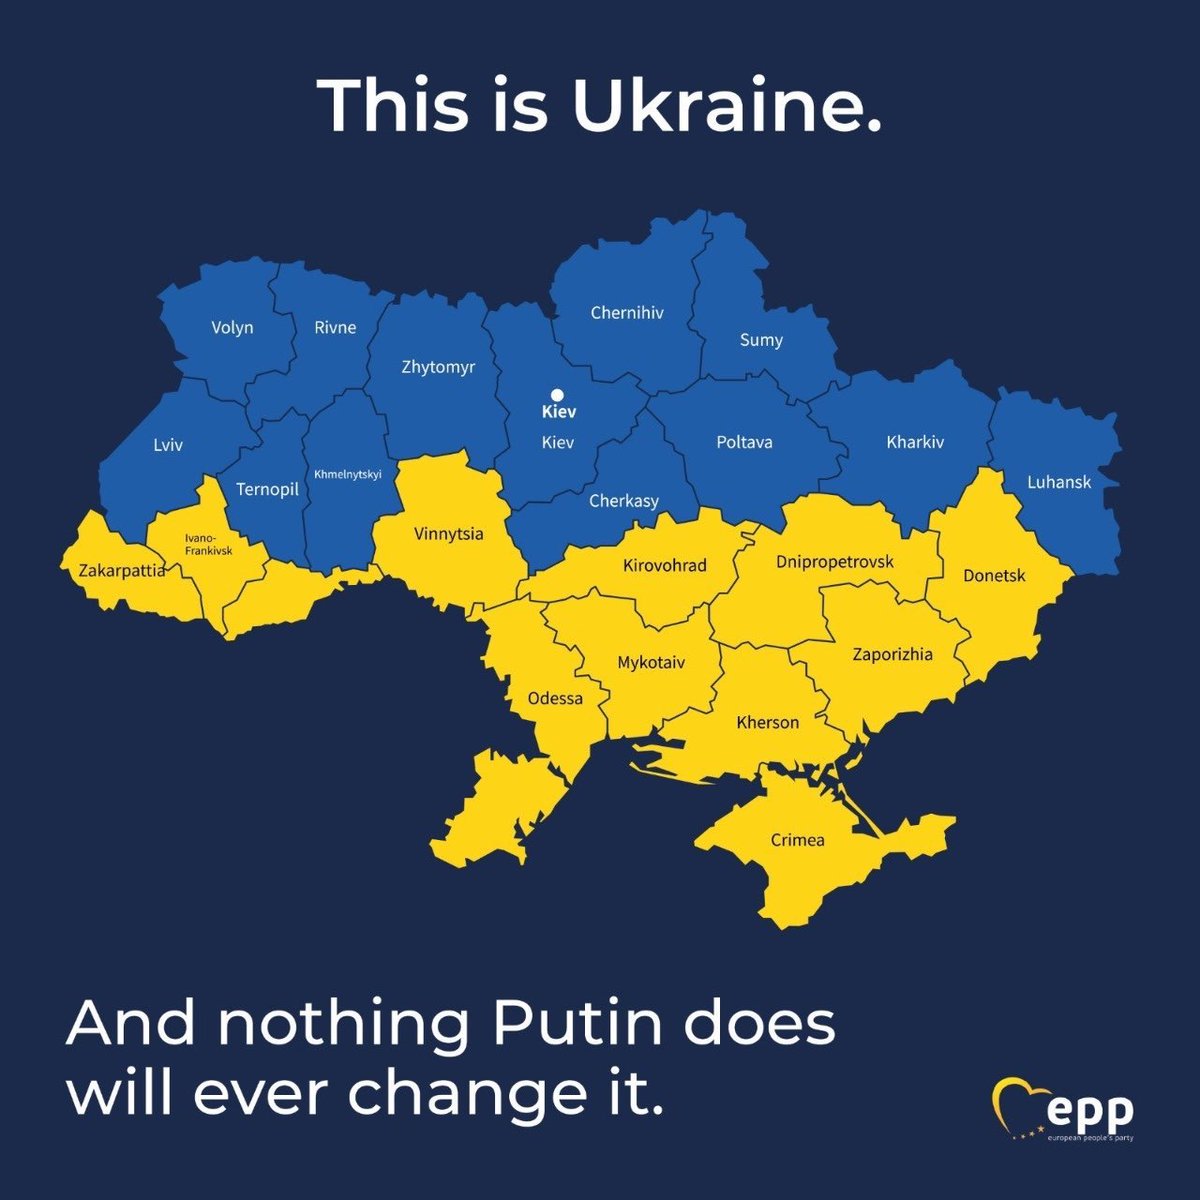 Крим ‒ це Україна. #CrimeaIsUkraine